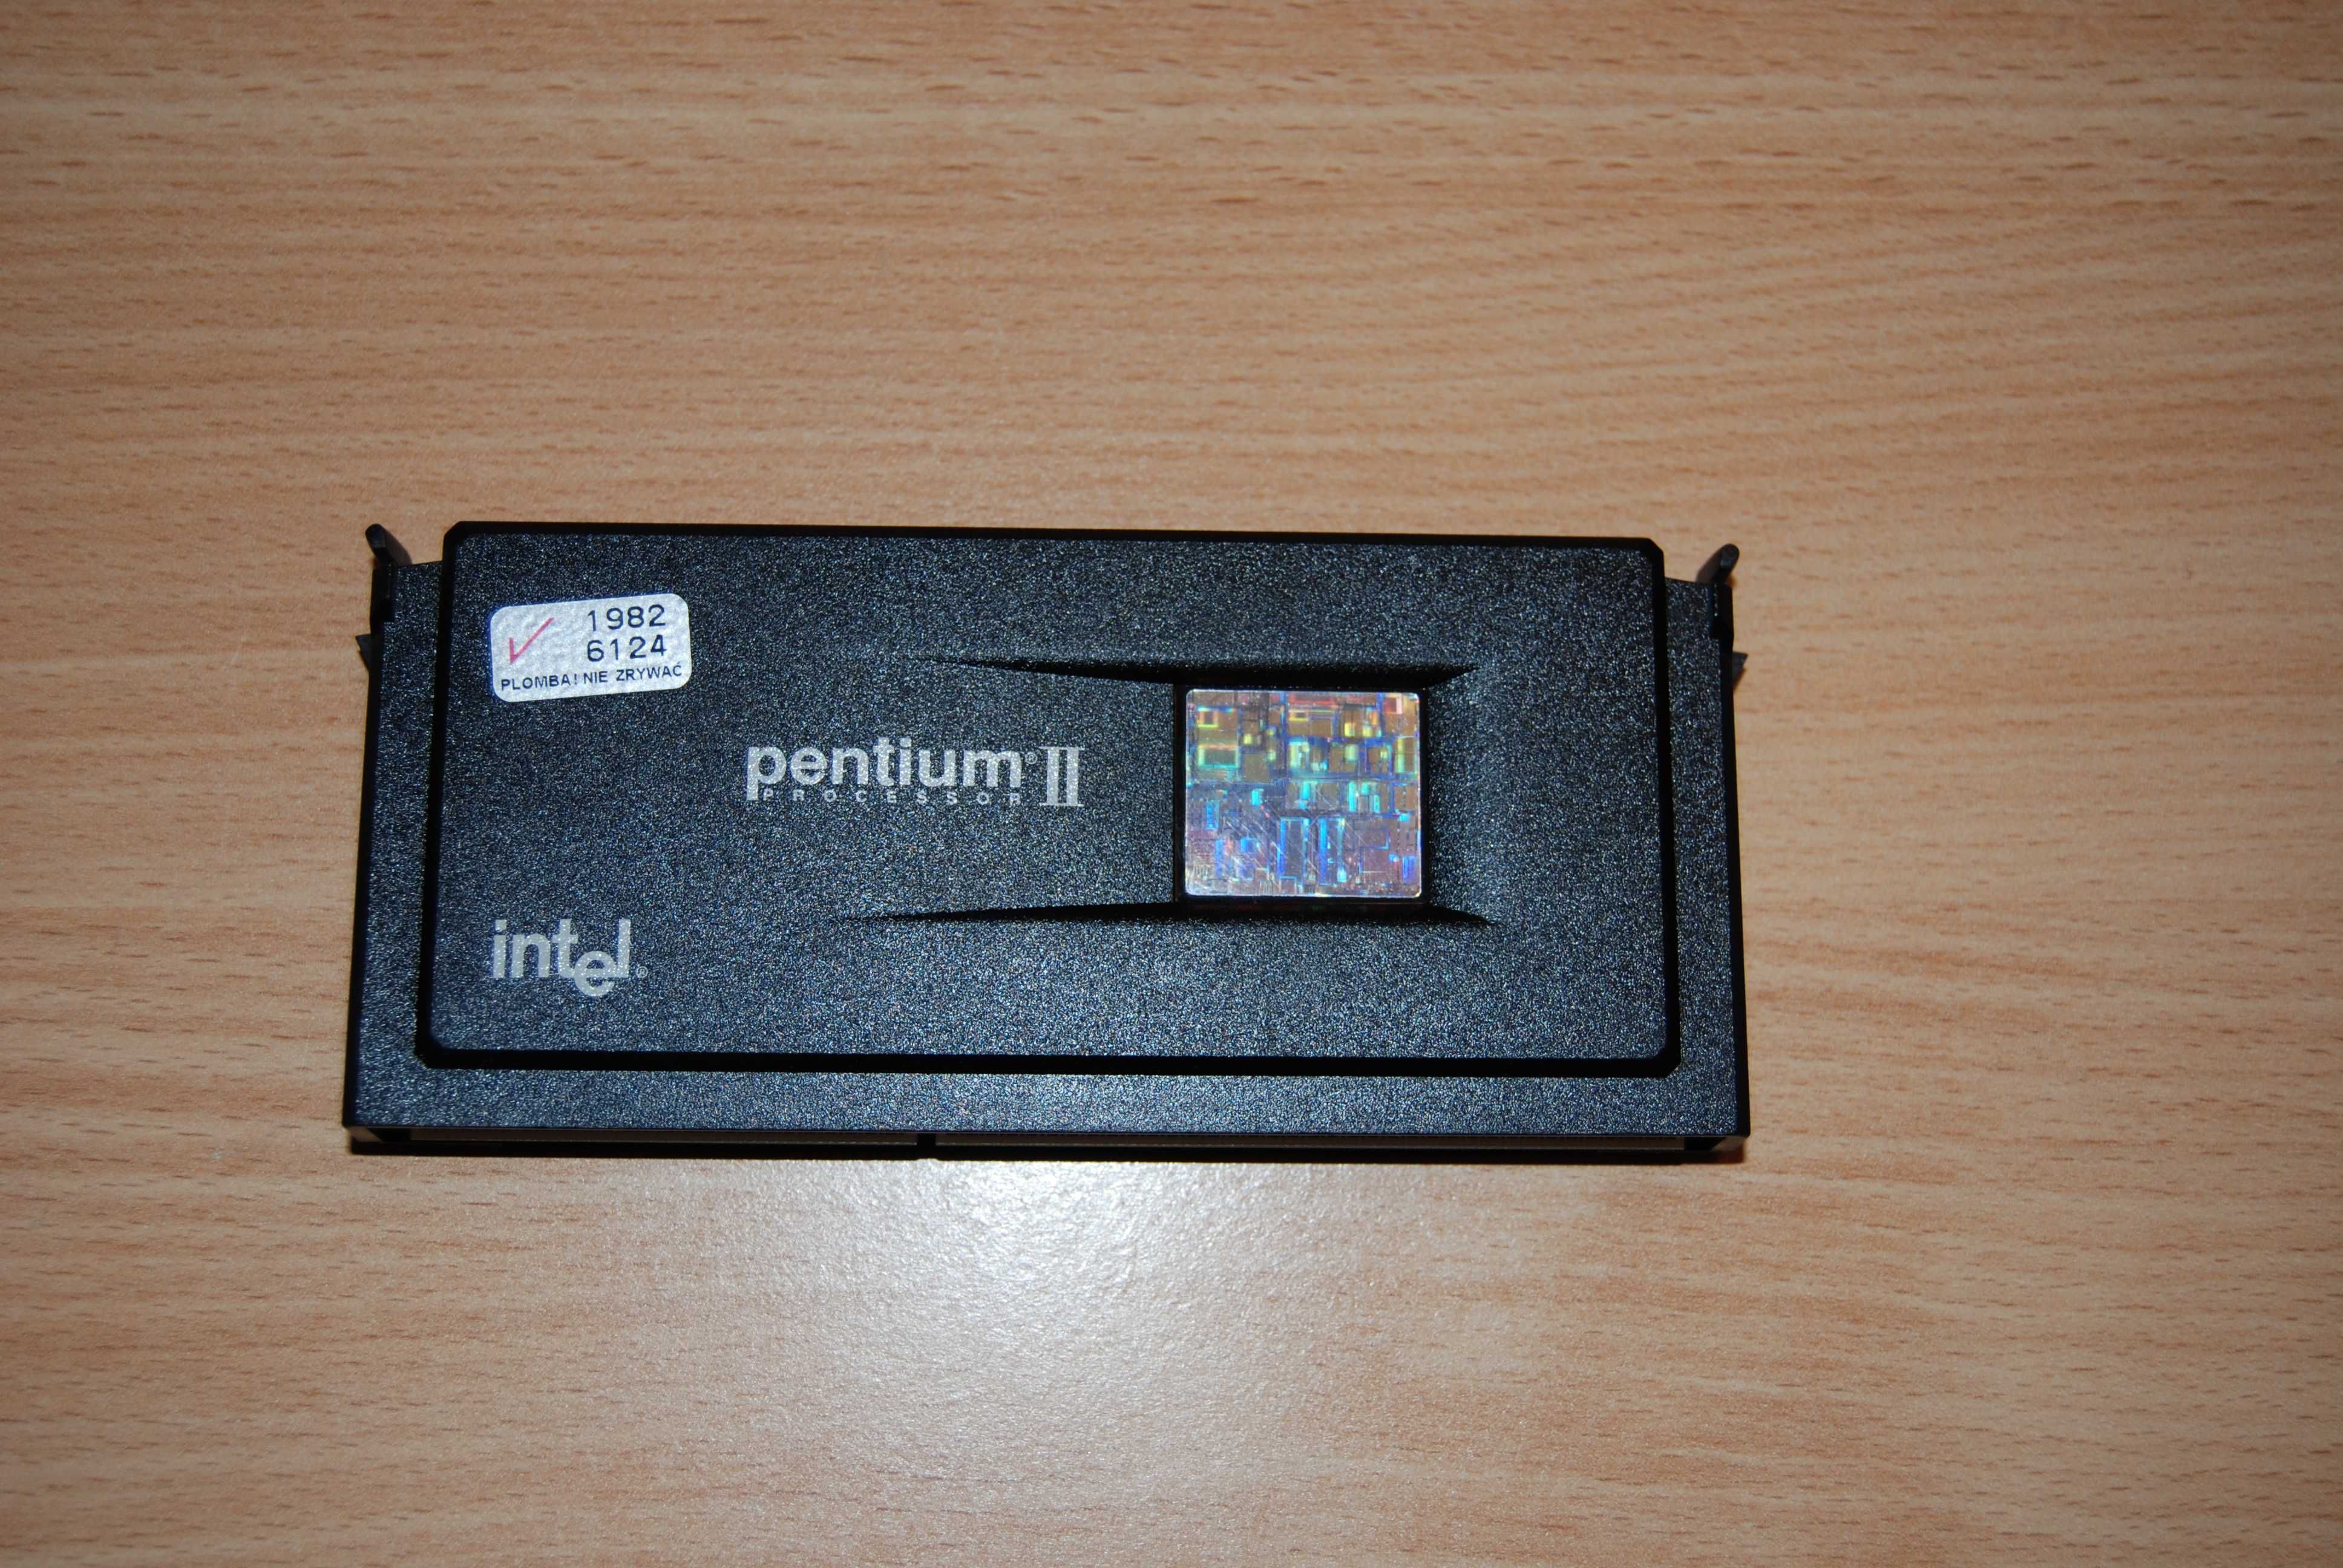 Procesor Pentium II retro PC ładny